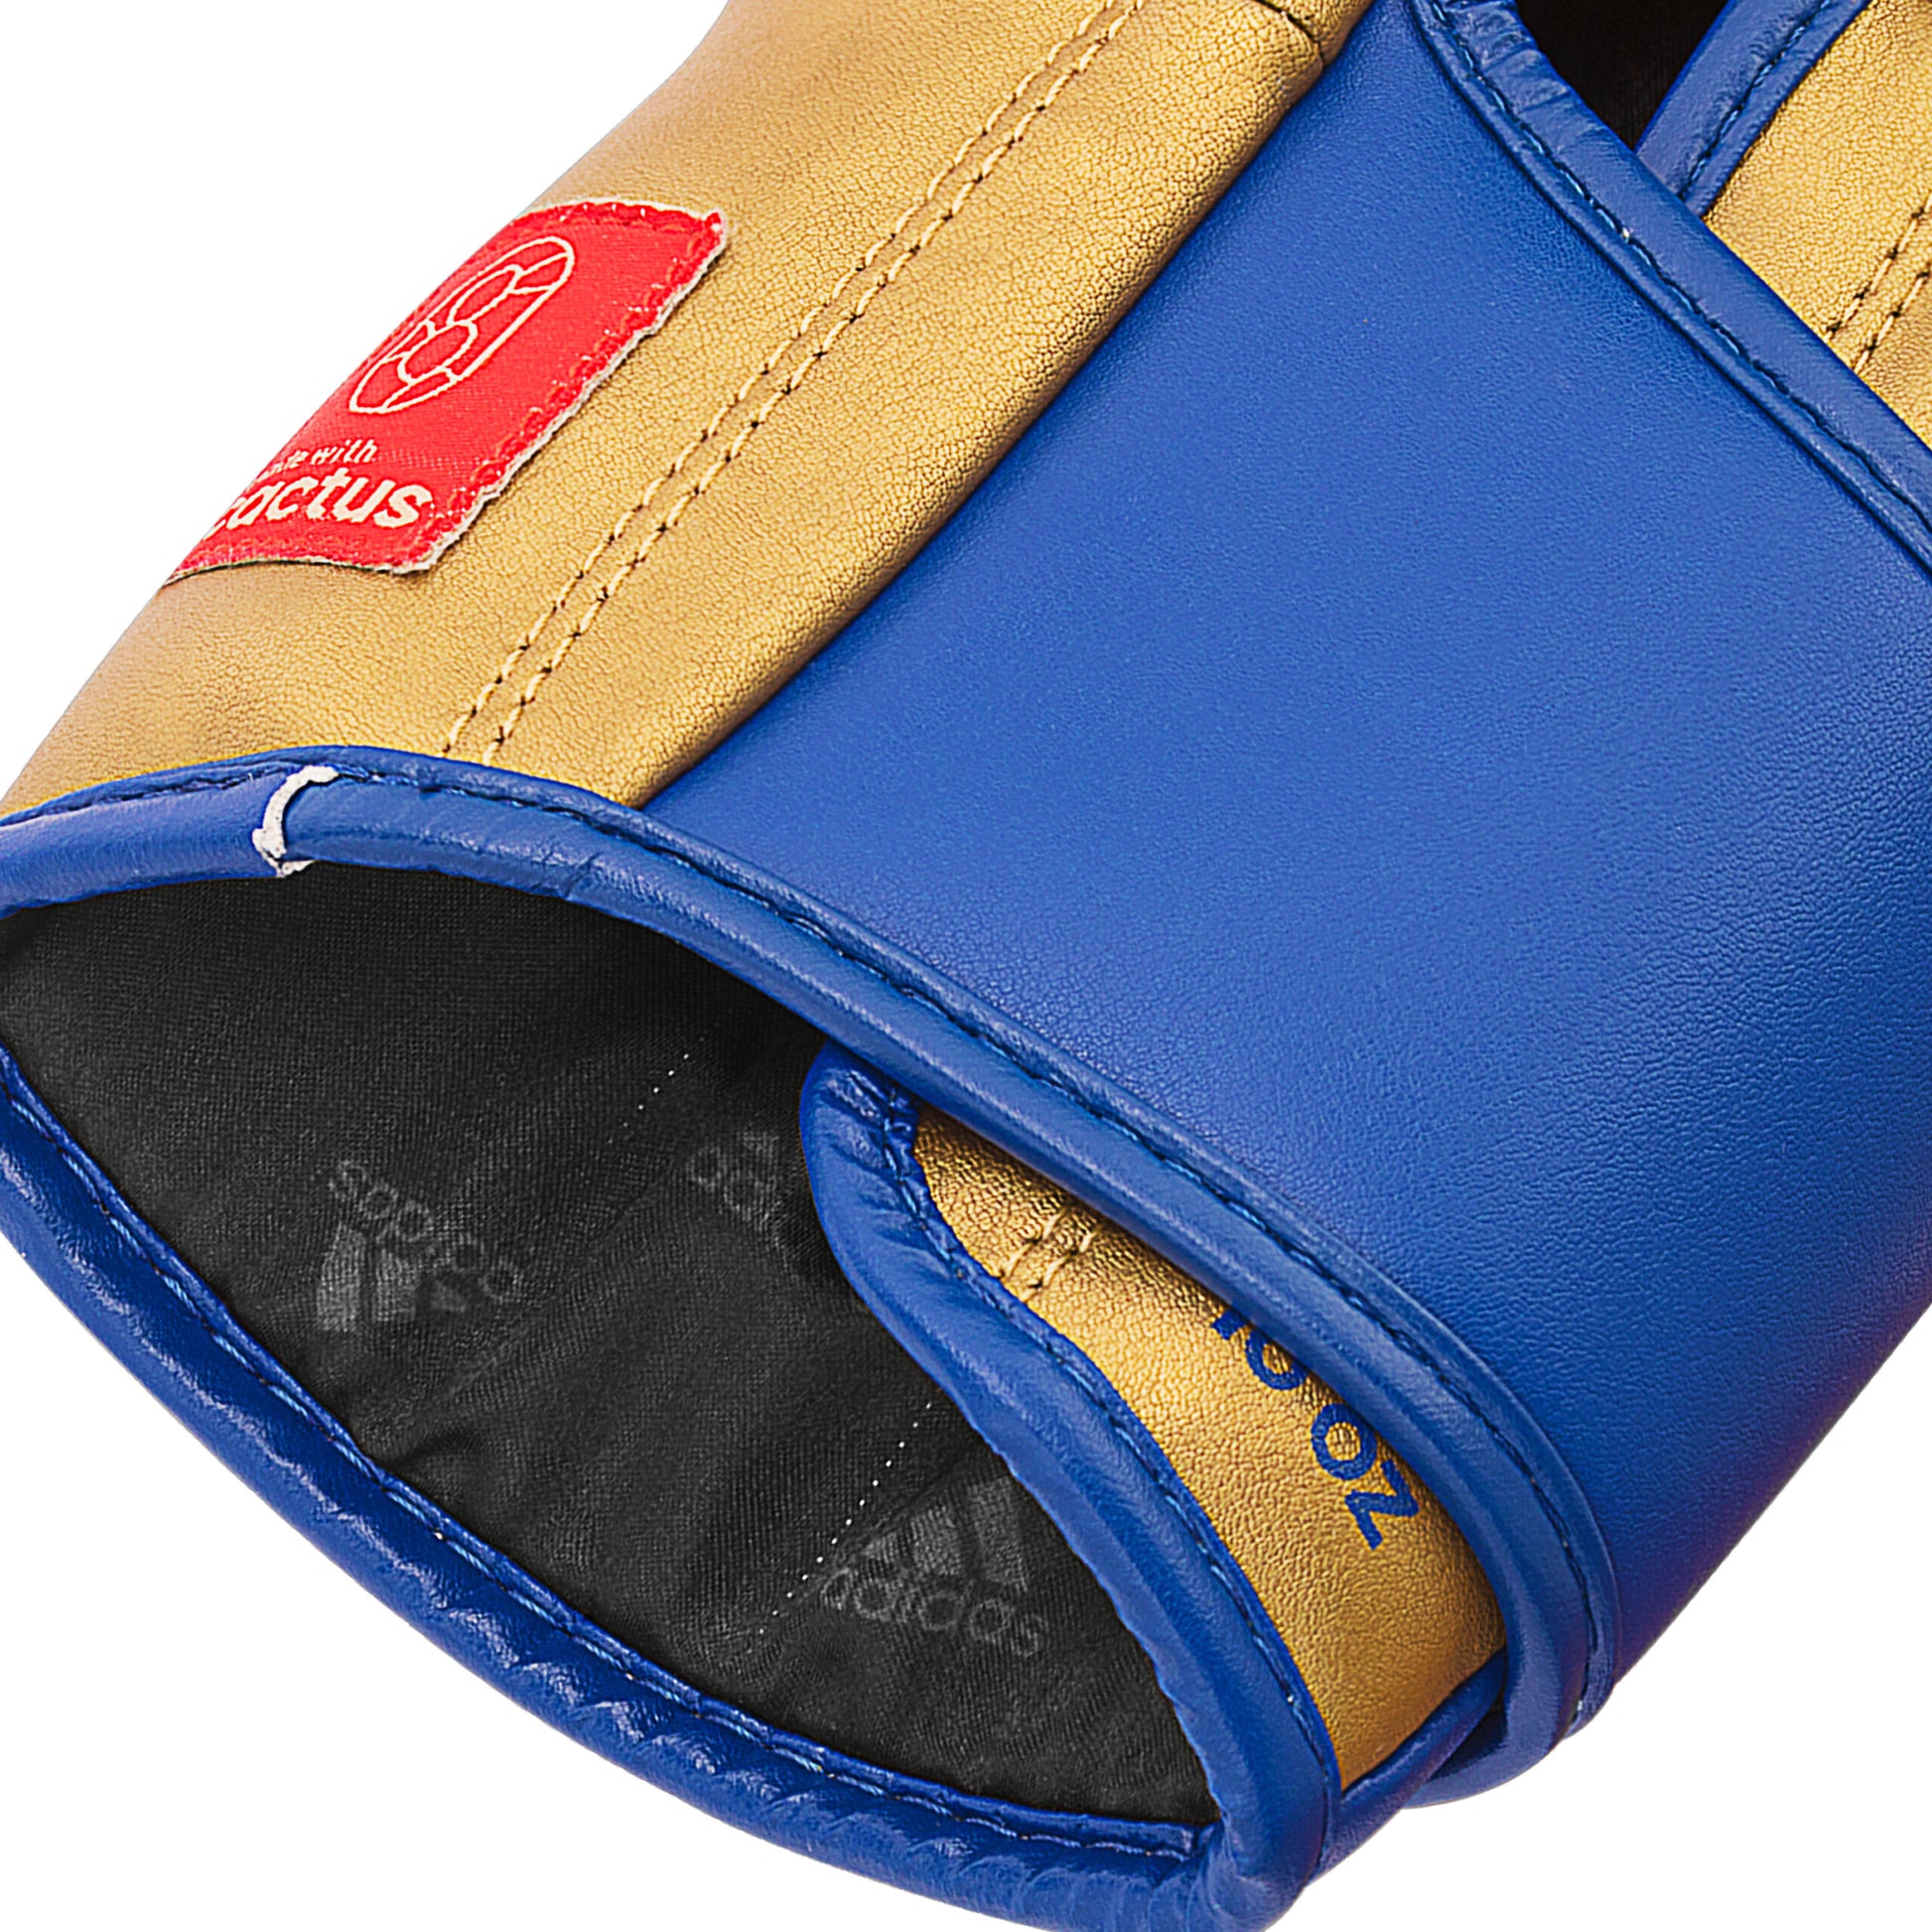 Adispd350tg Adidas Tilt Speed 350 Boxiing Gloves Blue Gold 07